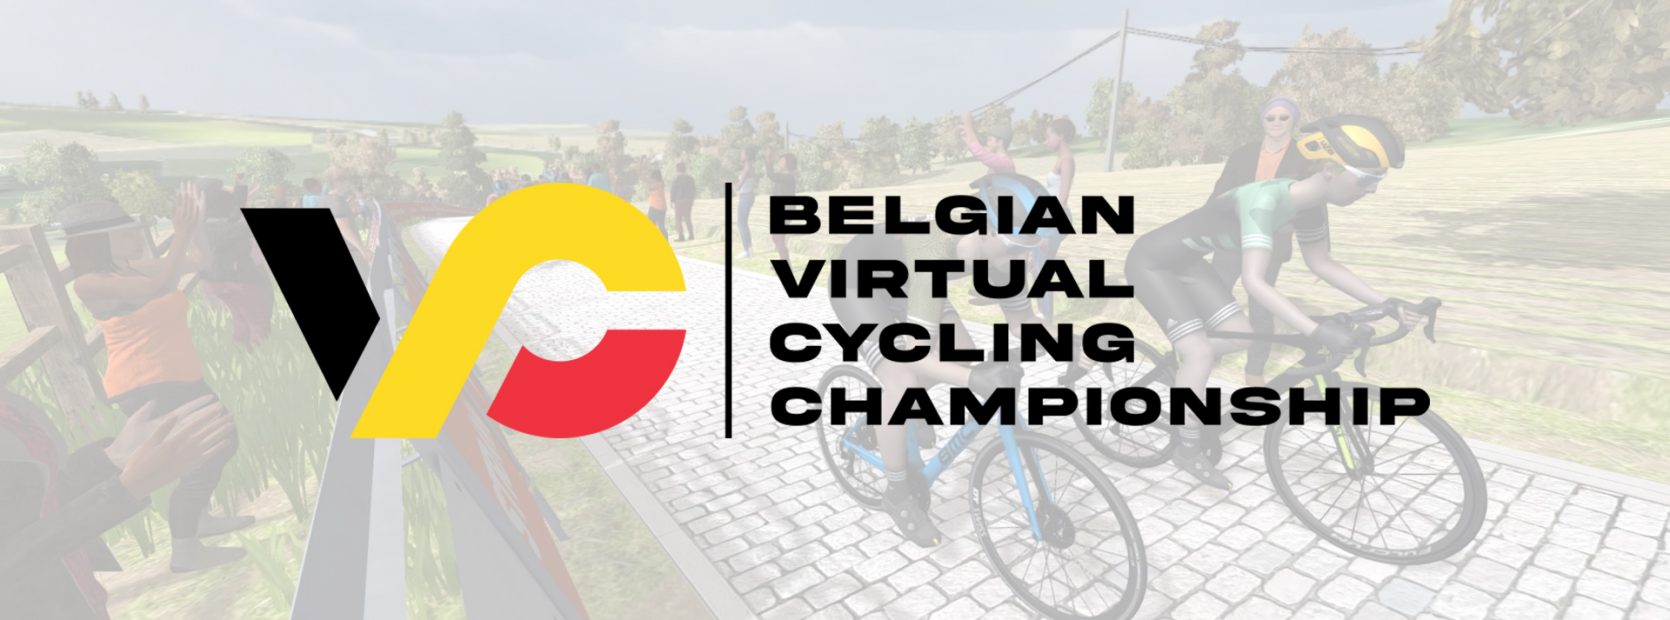 Belgian Virtual Cycling Championship